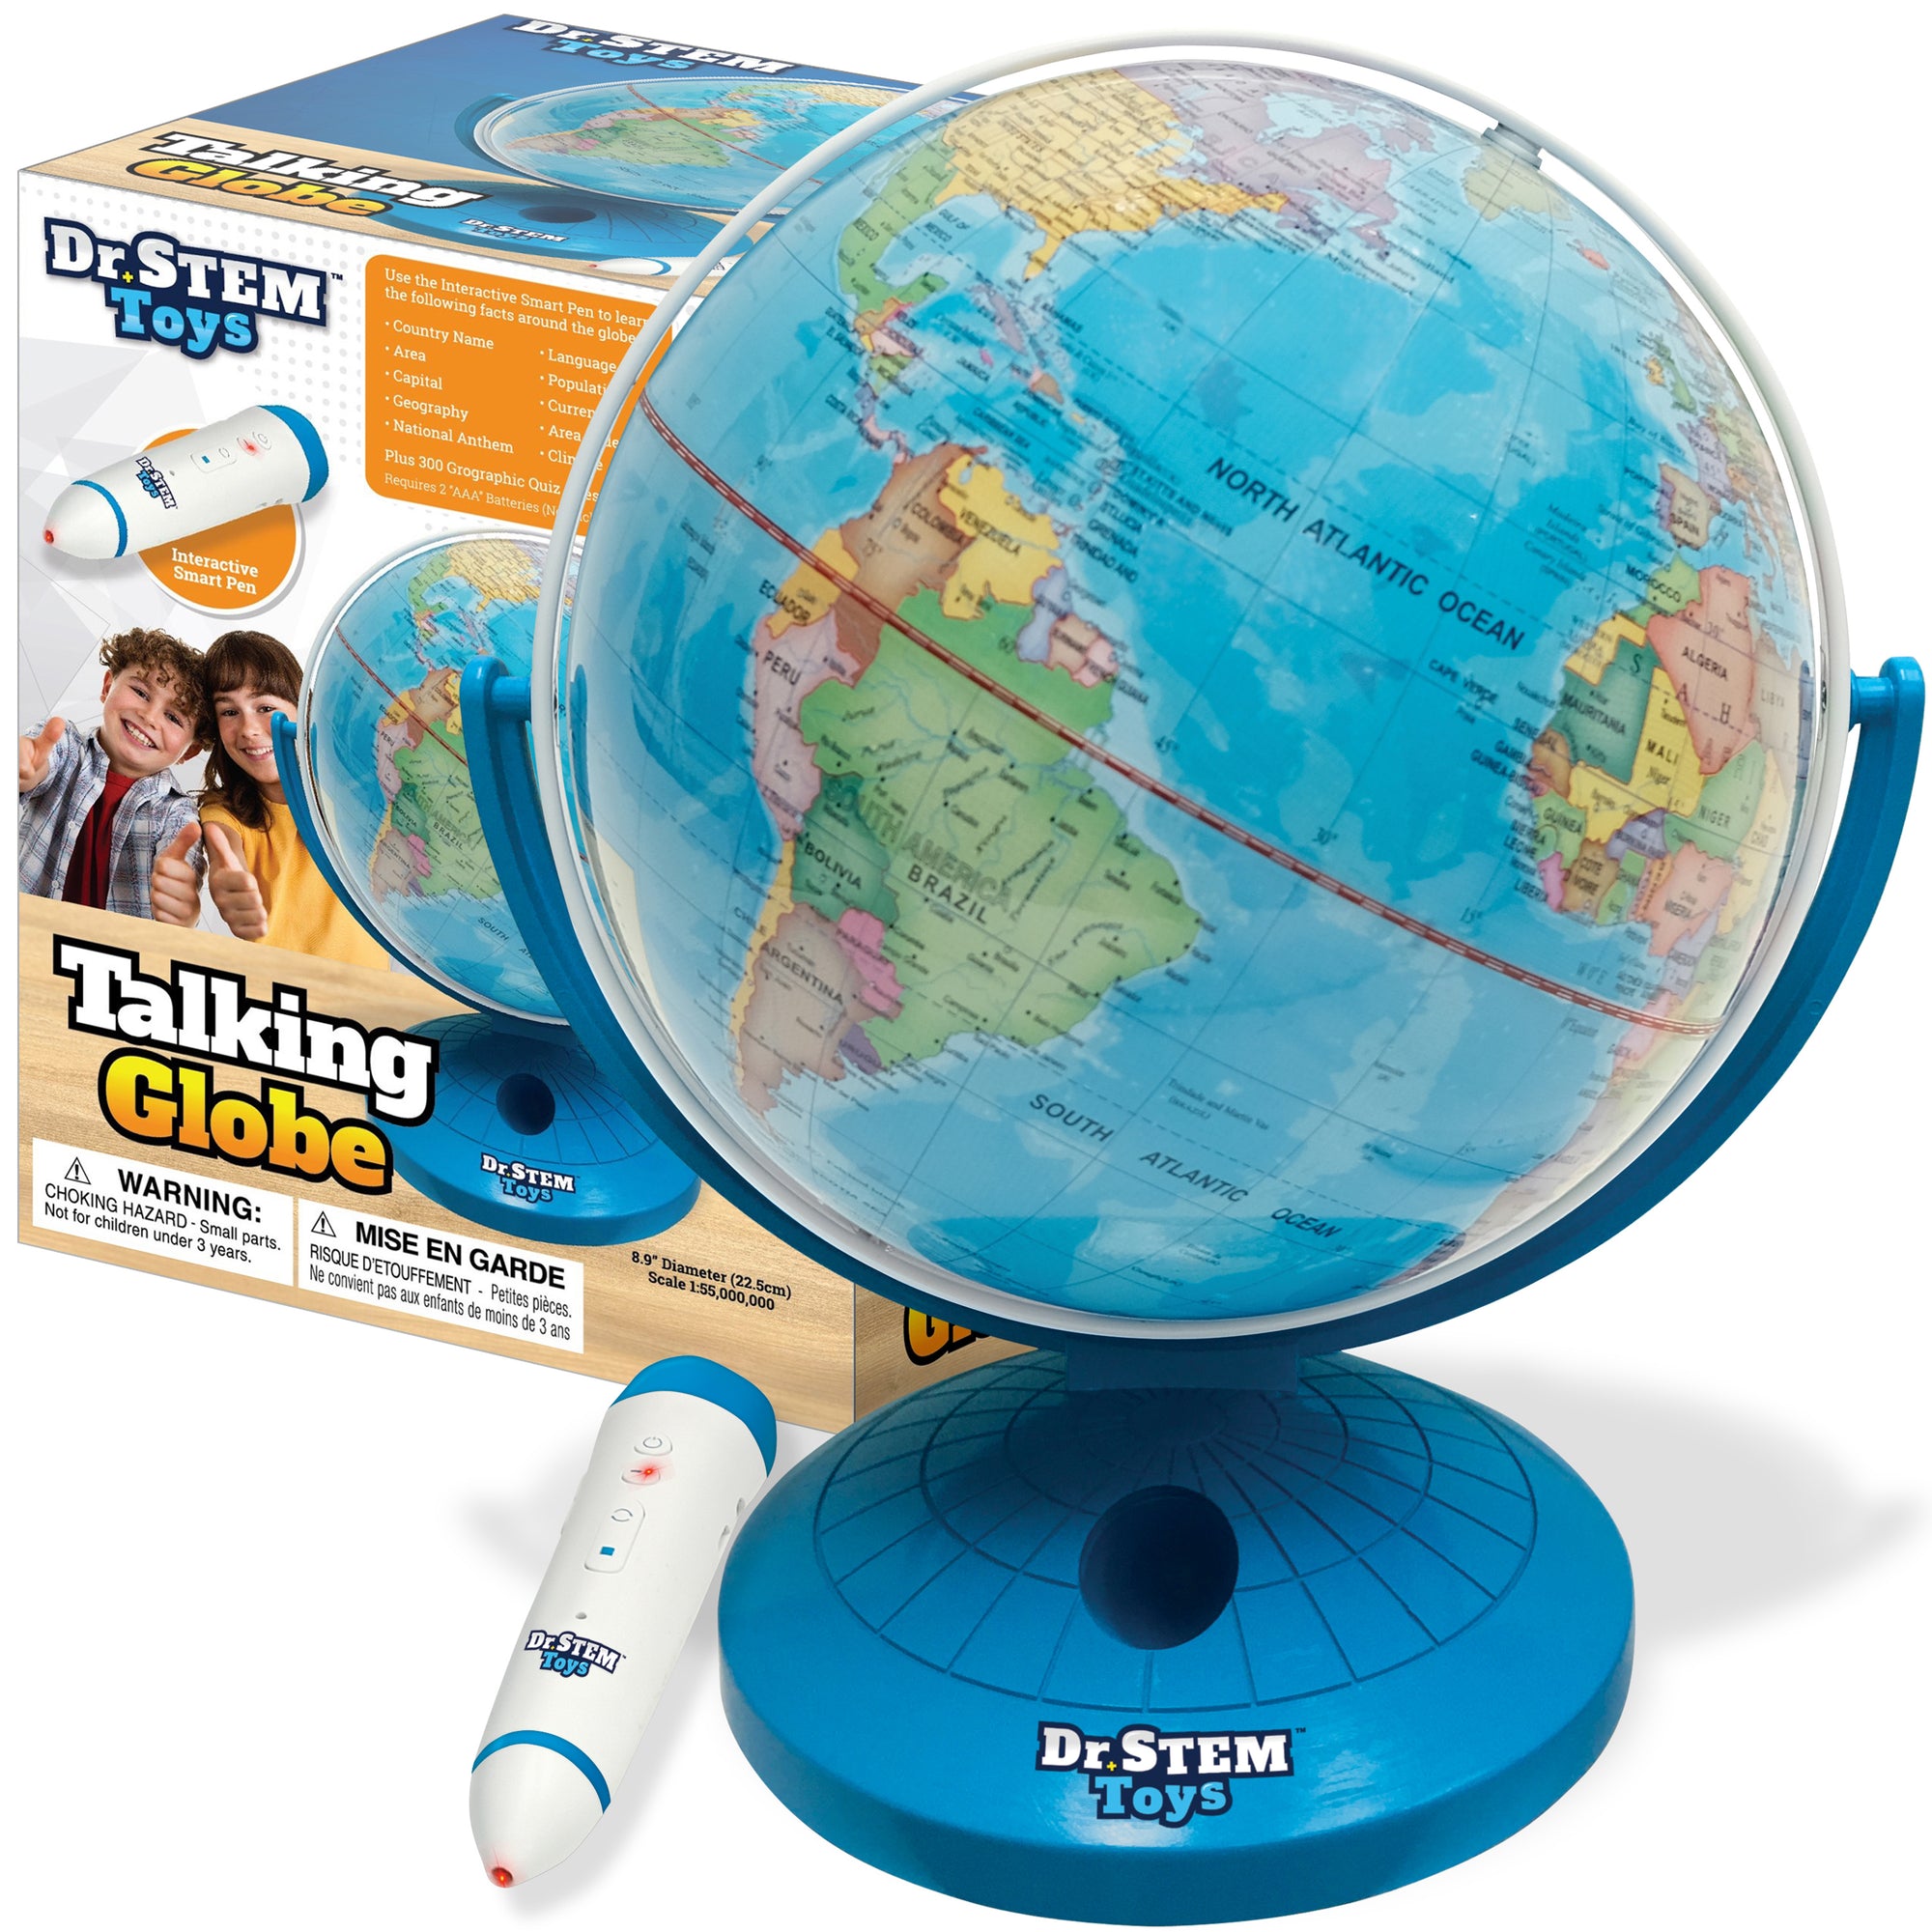 Dr. STEM Toys Insteractive Talking Globe